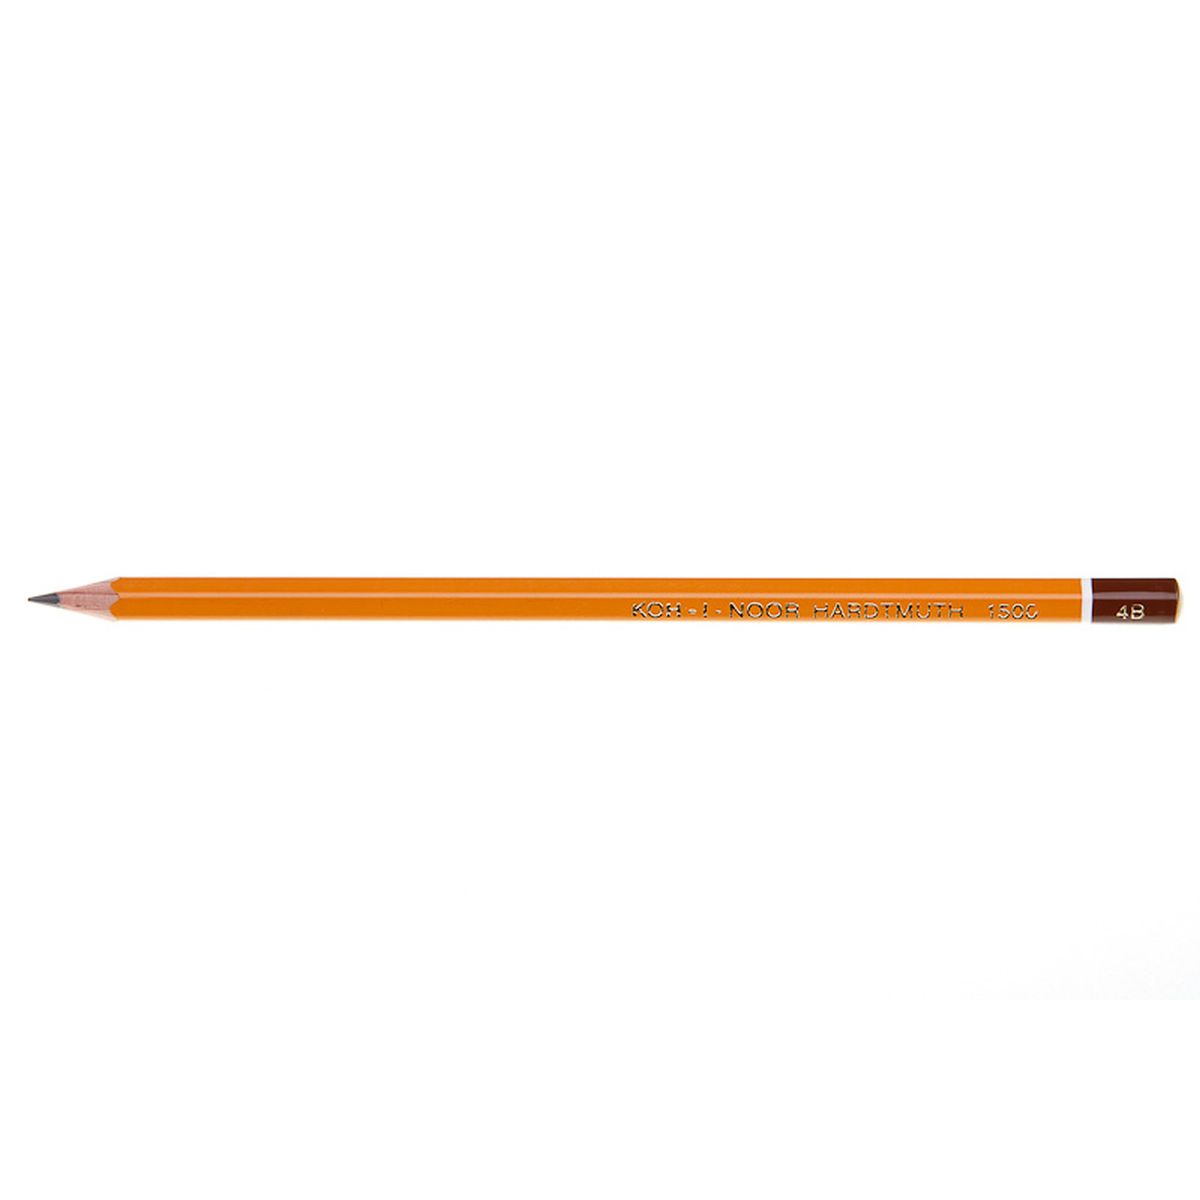 Ołówek Koh-I-Noor 1500 4B